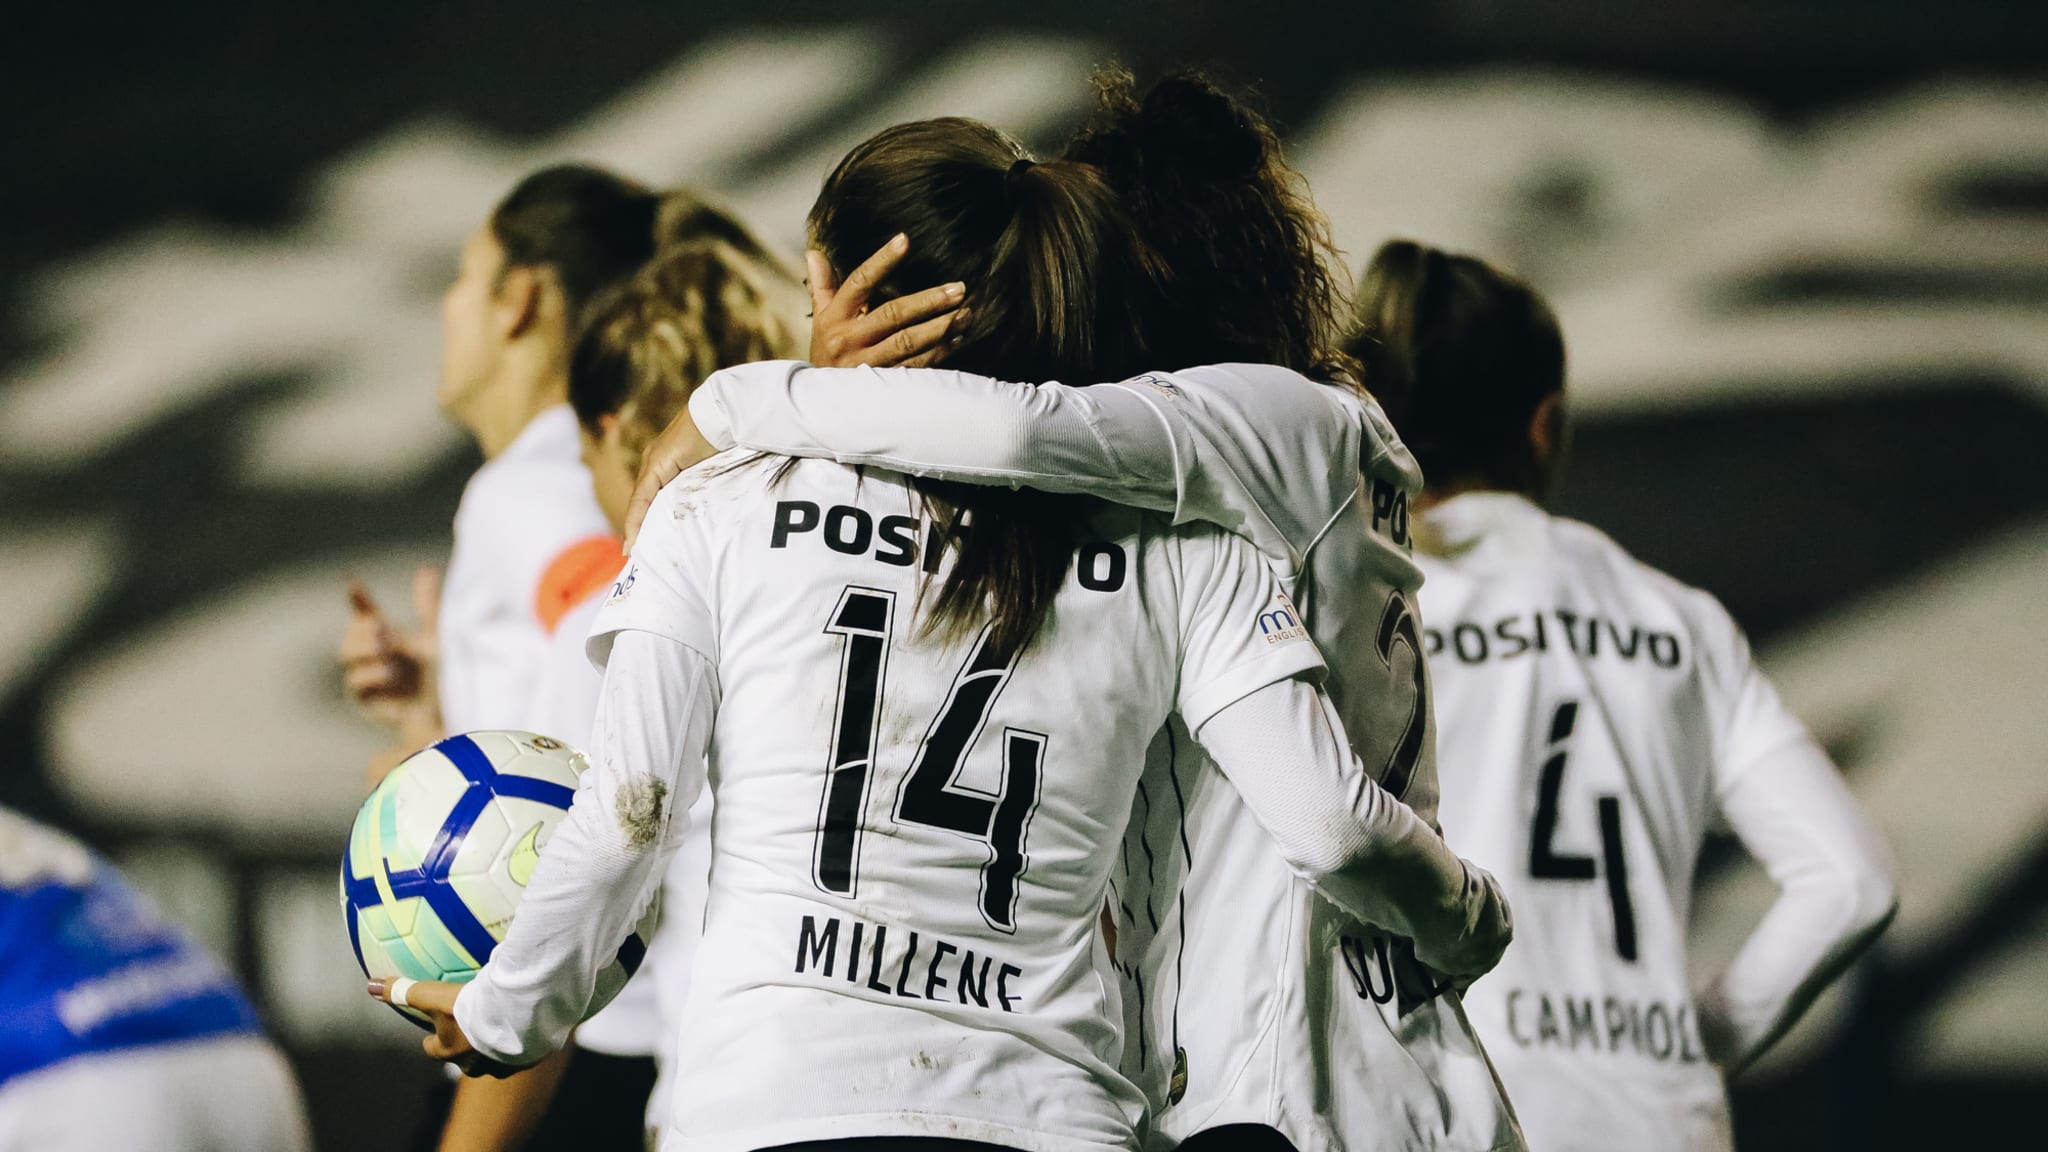 Futebol Intl FC в Твиттере: "Corinthians women set new world